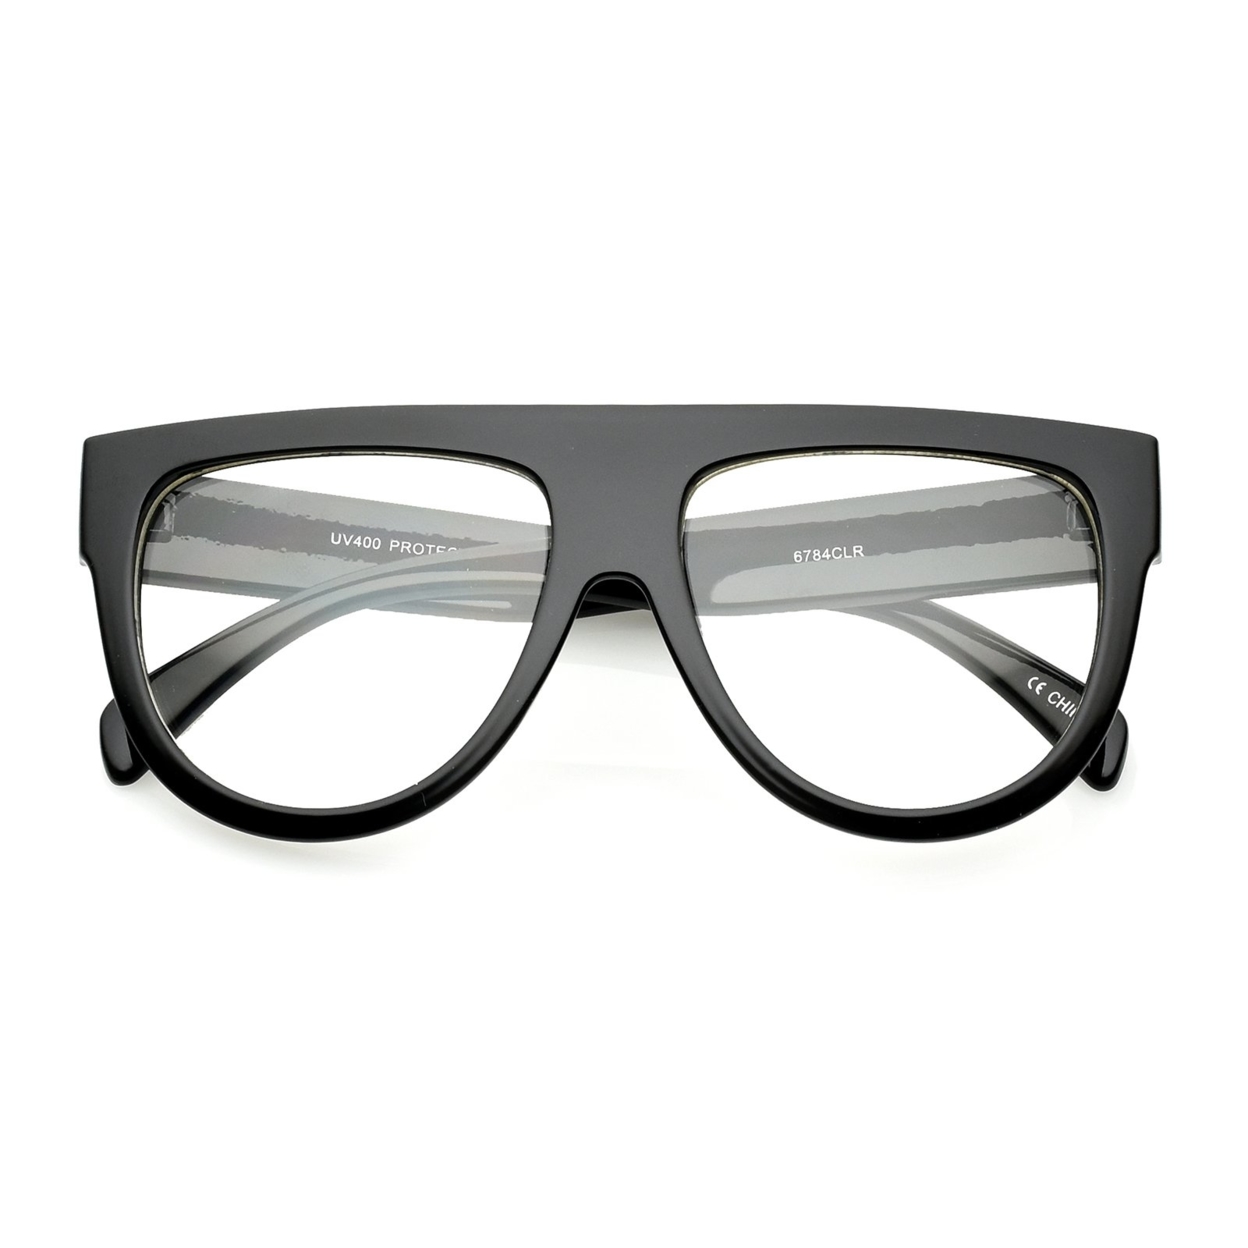 Oversize Horn Rim Wide Temple Flat Top Clear Lens Aviator Eyeglasses 145mm - Shiny Black / Clear